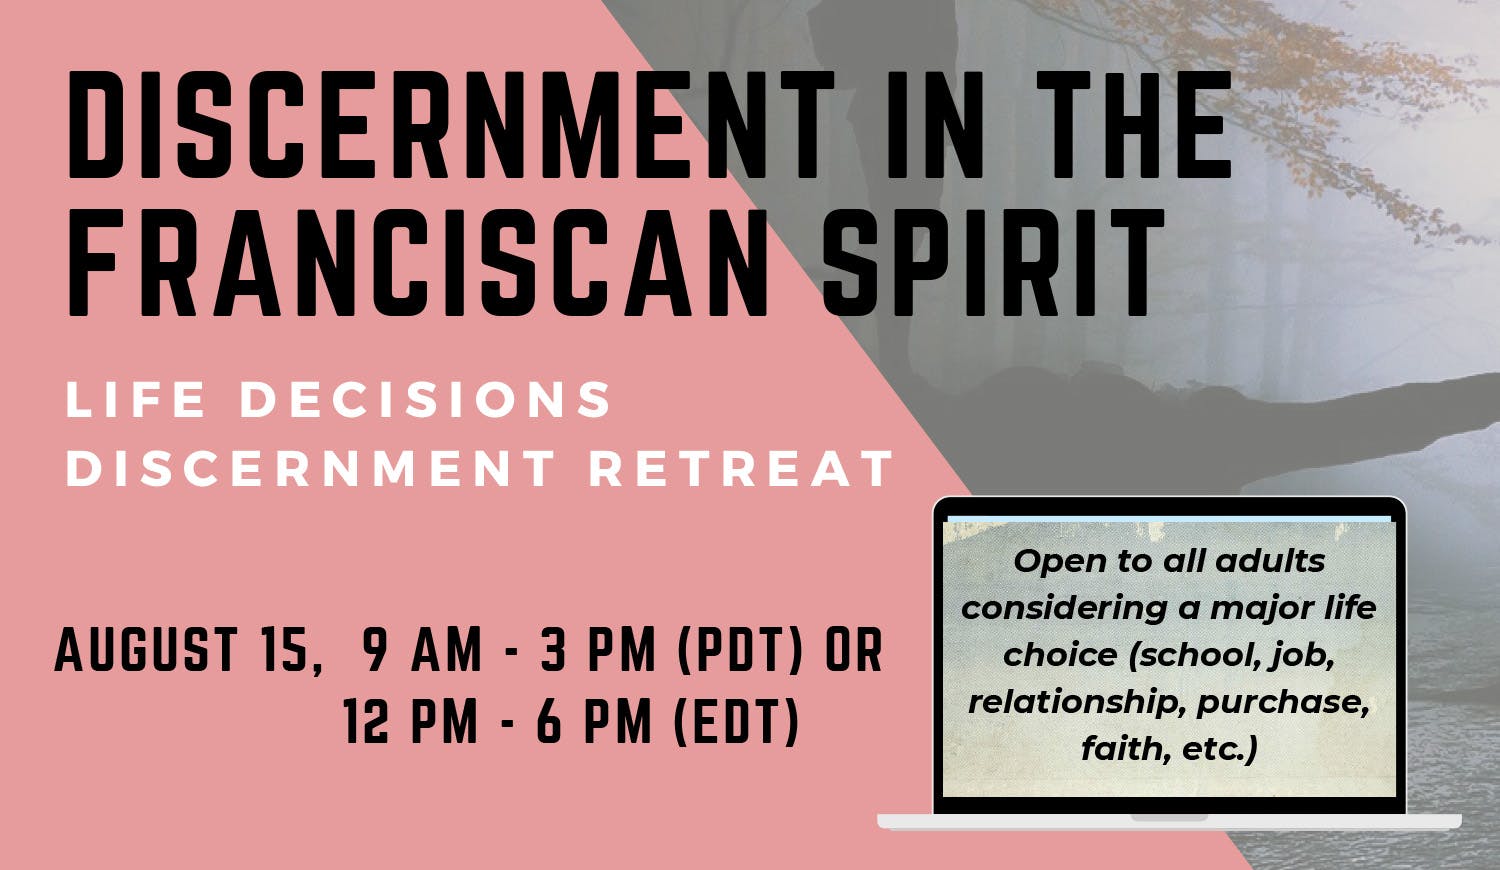 Discernment in the Franciscan Spirit